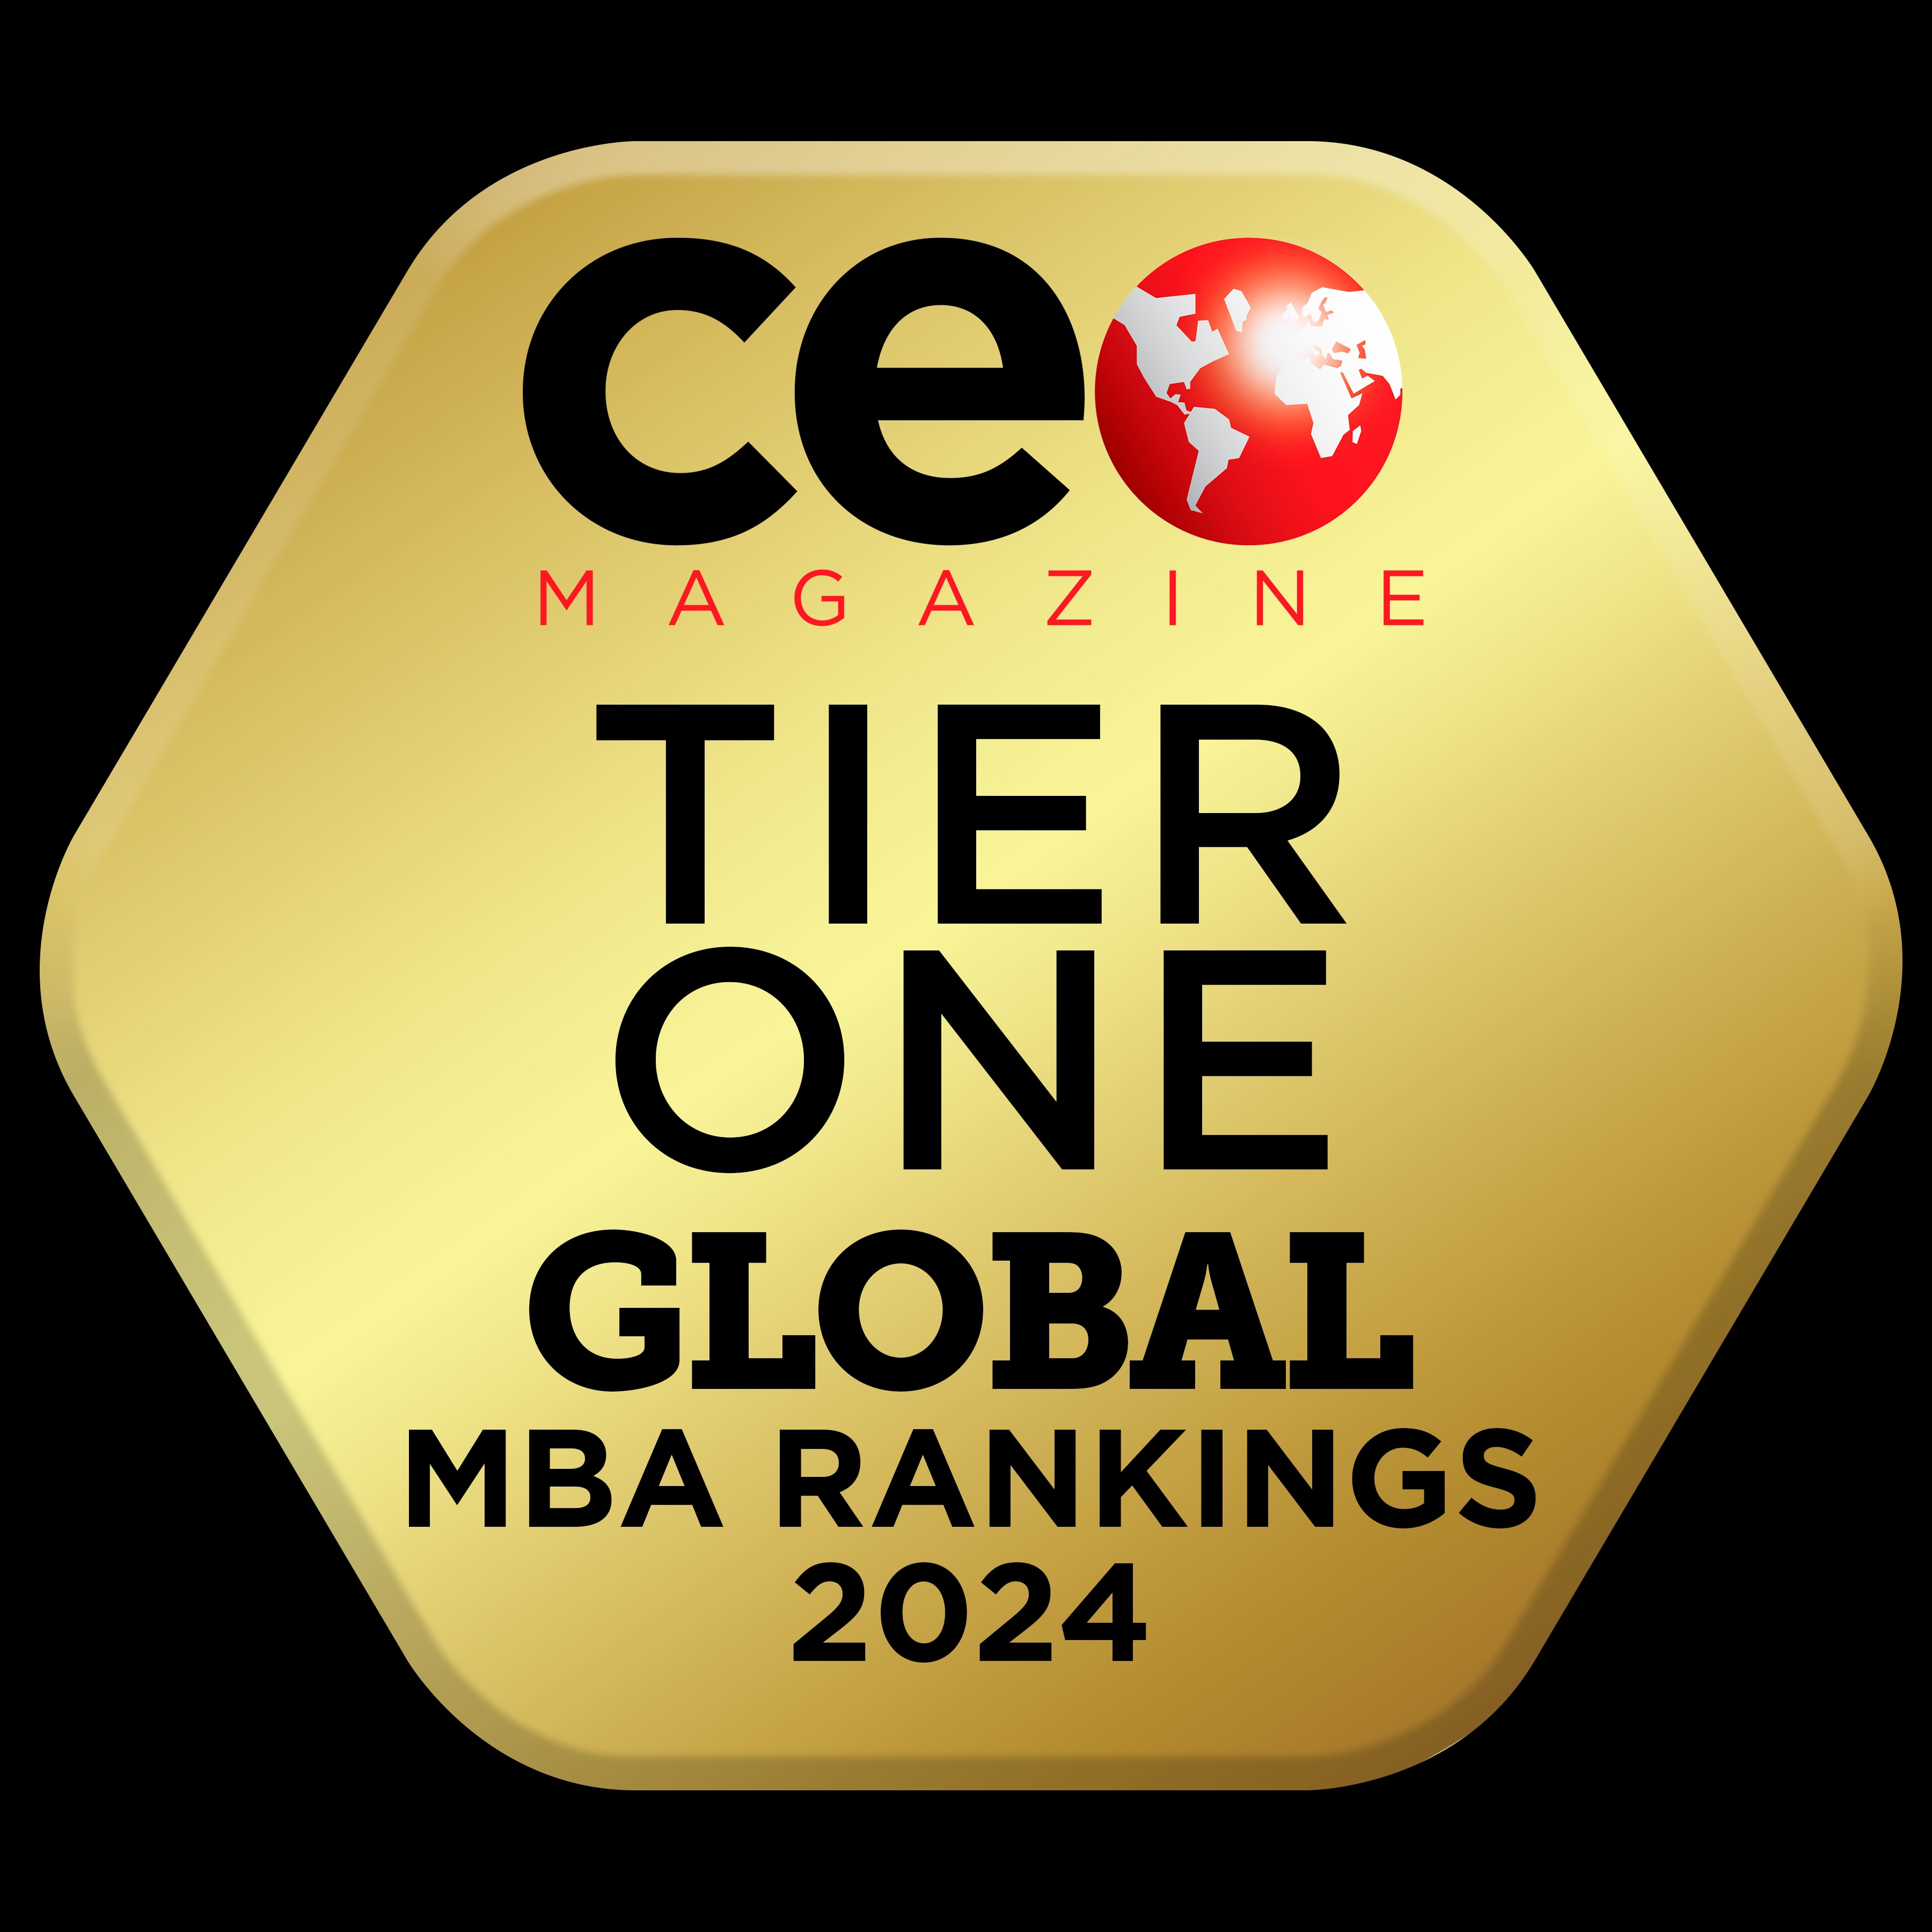 Global MBA Rankings logo